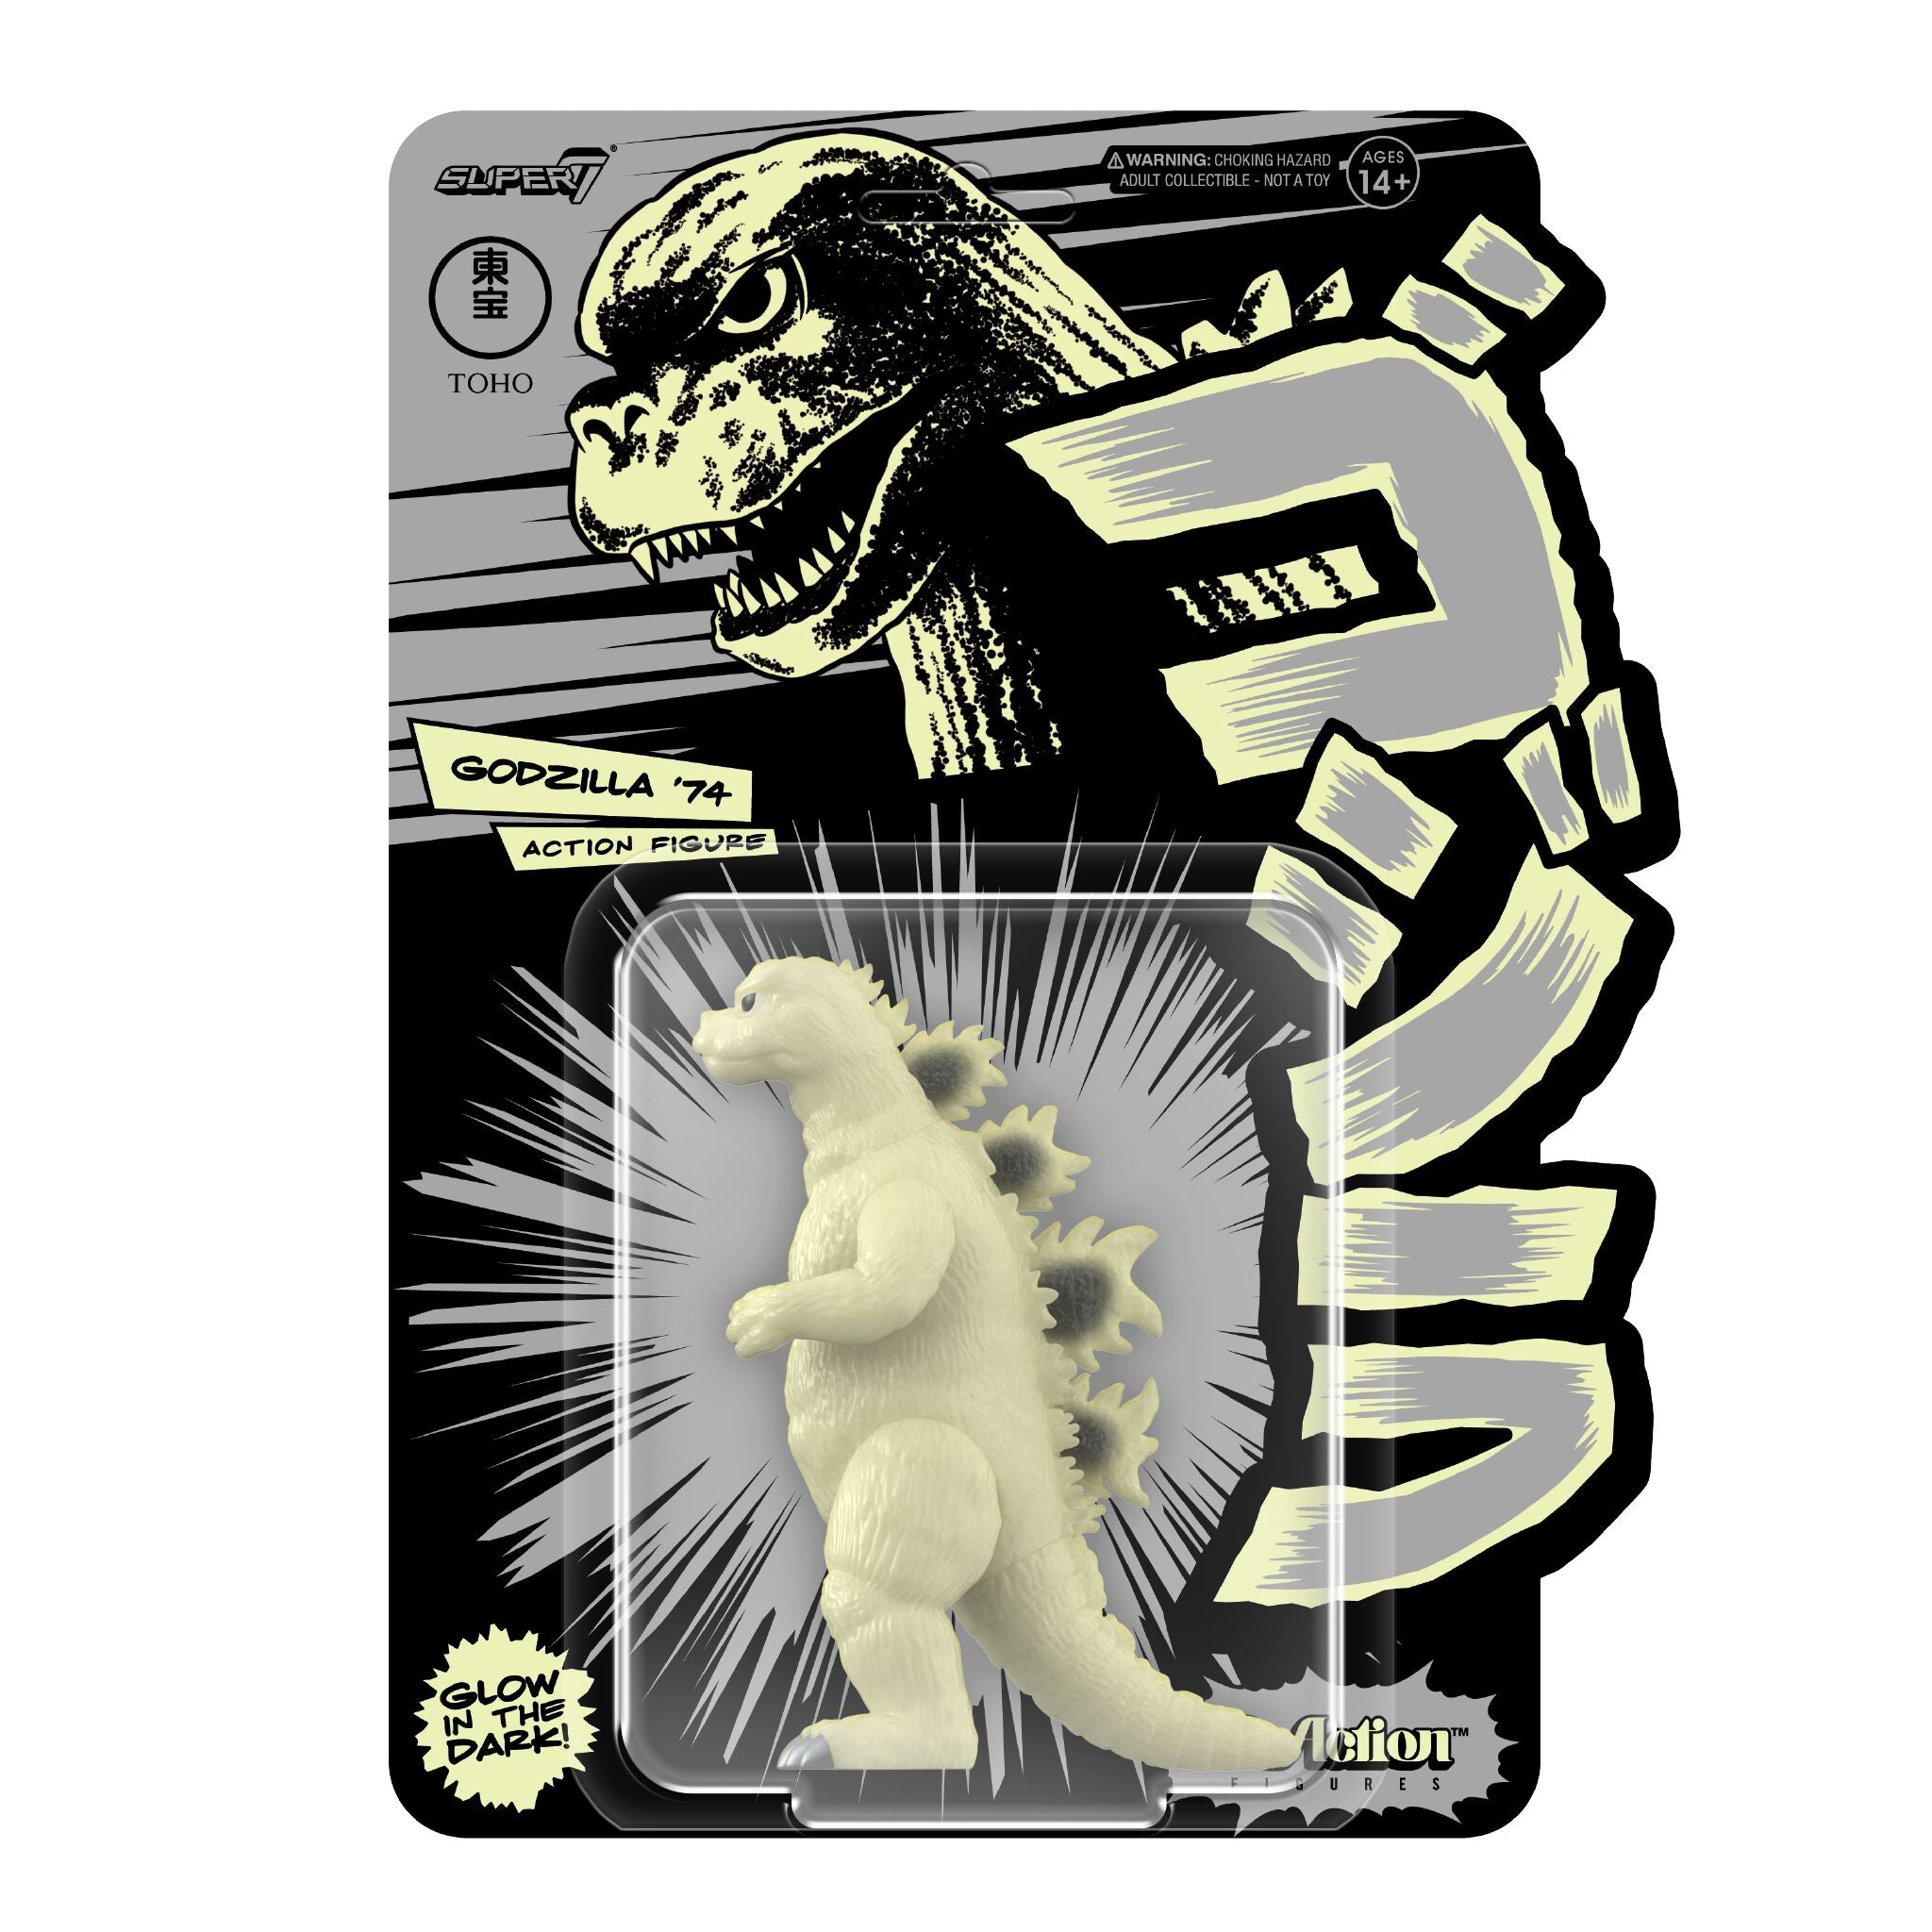 Toho ReAction Figures Wave 5 Godzilla Day - Godzilla '74 Glow